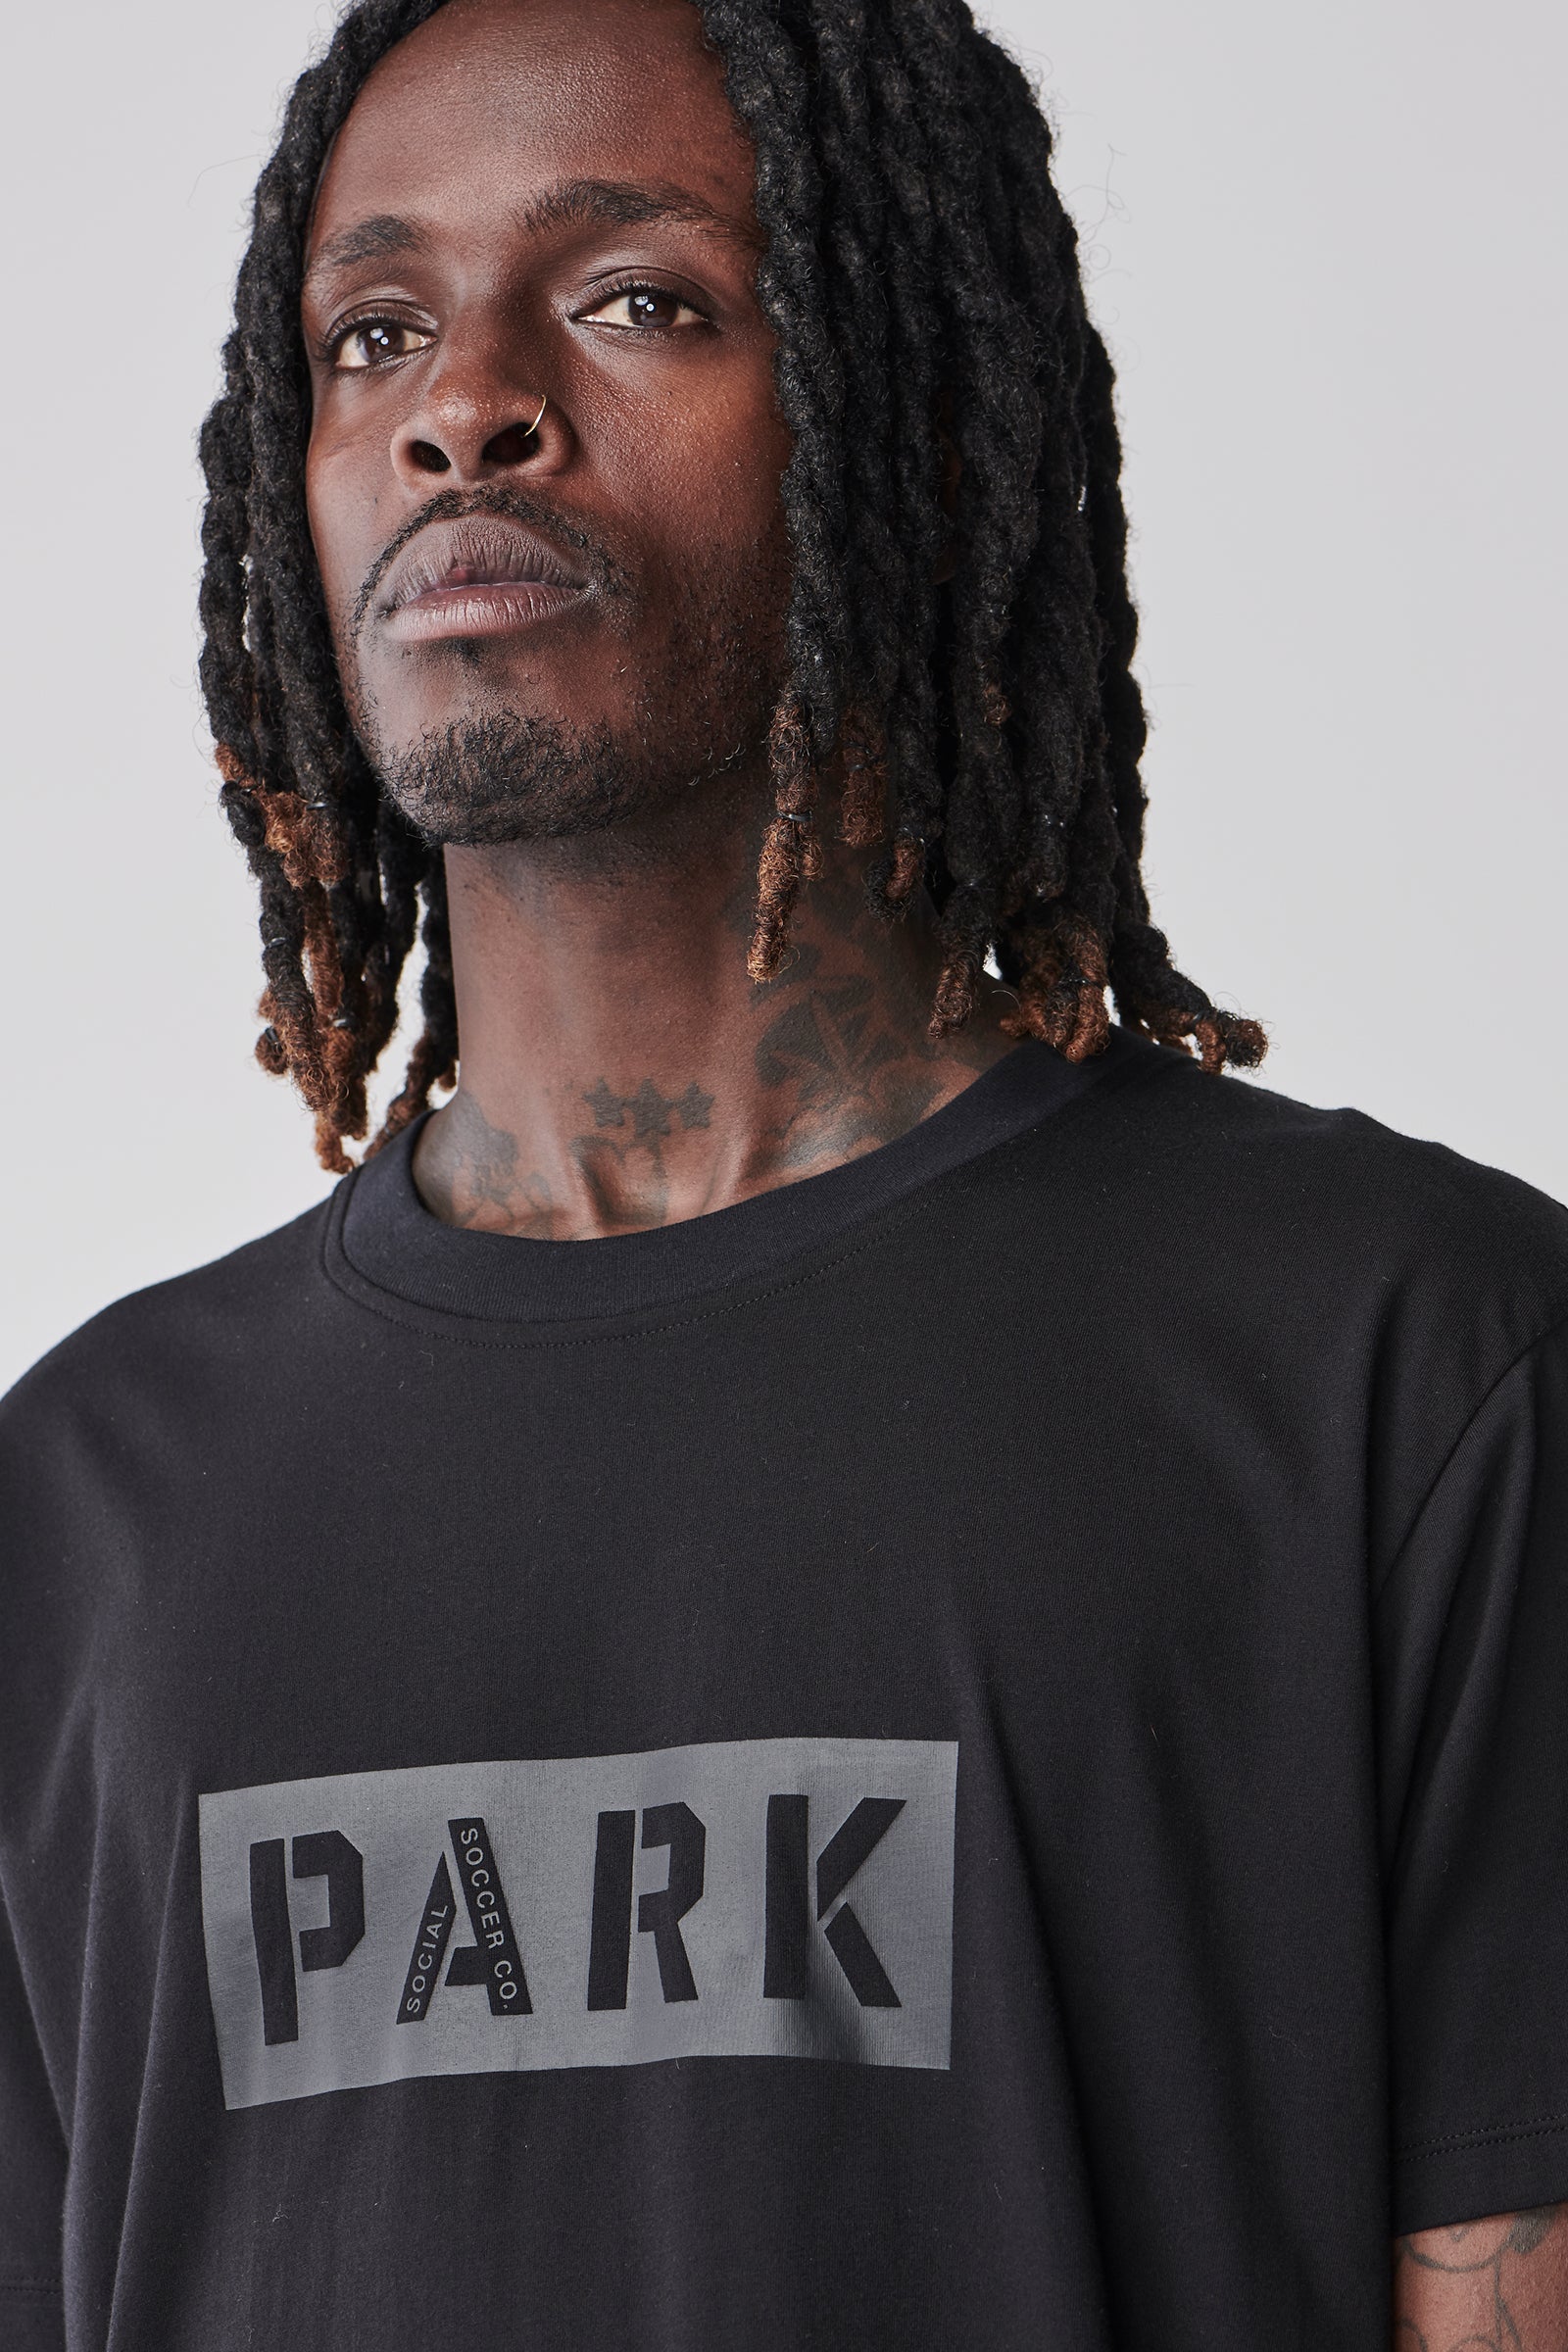 PARK T Shirt - Black